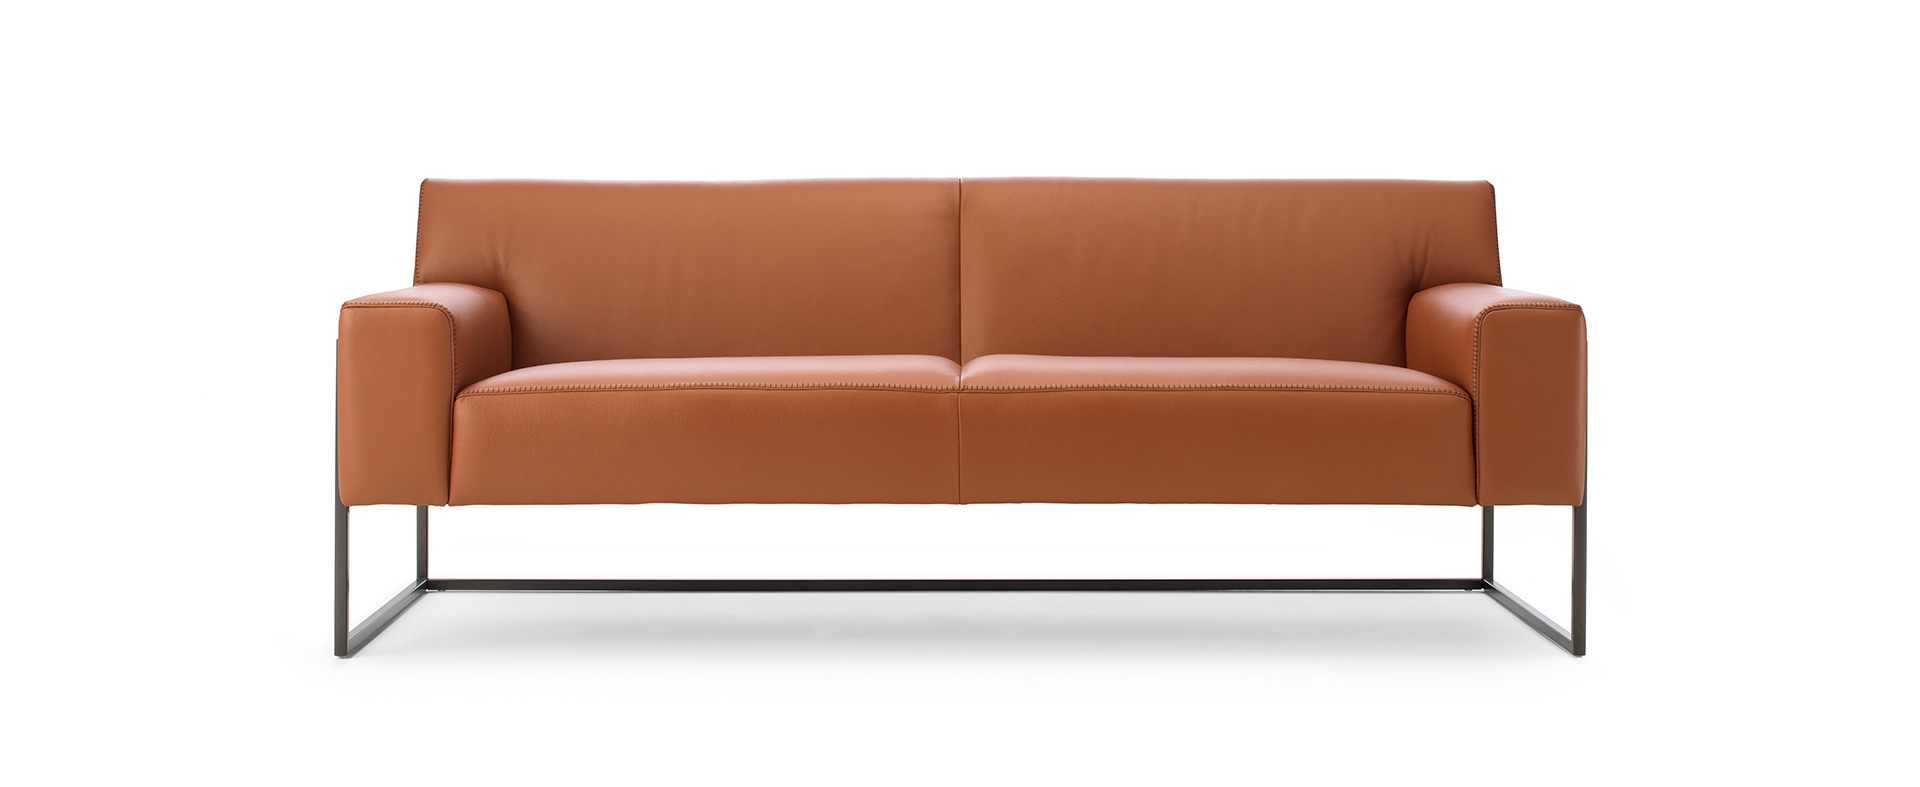 Adartne sofa